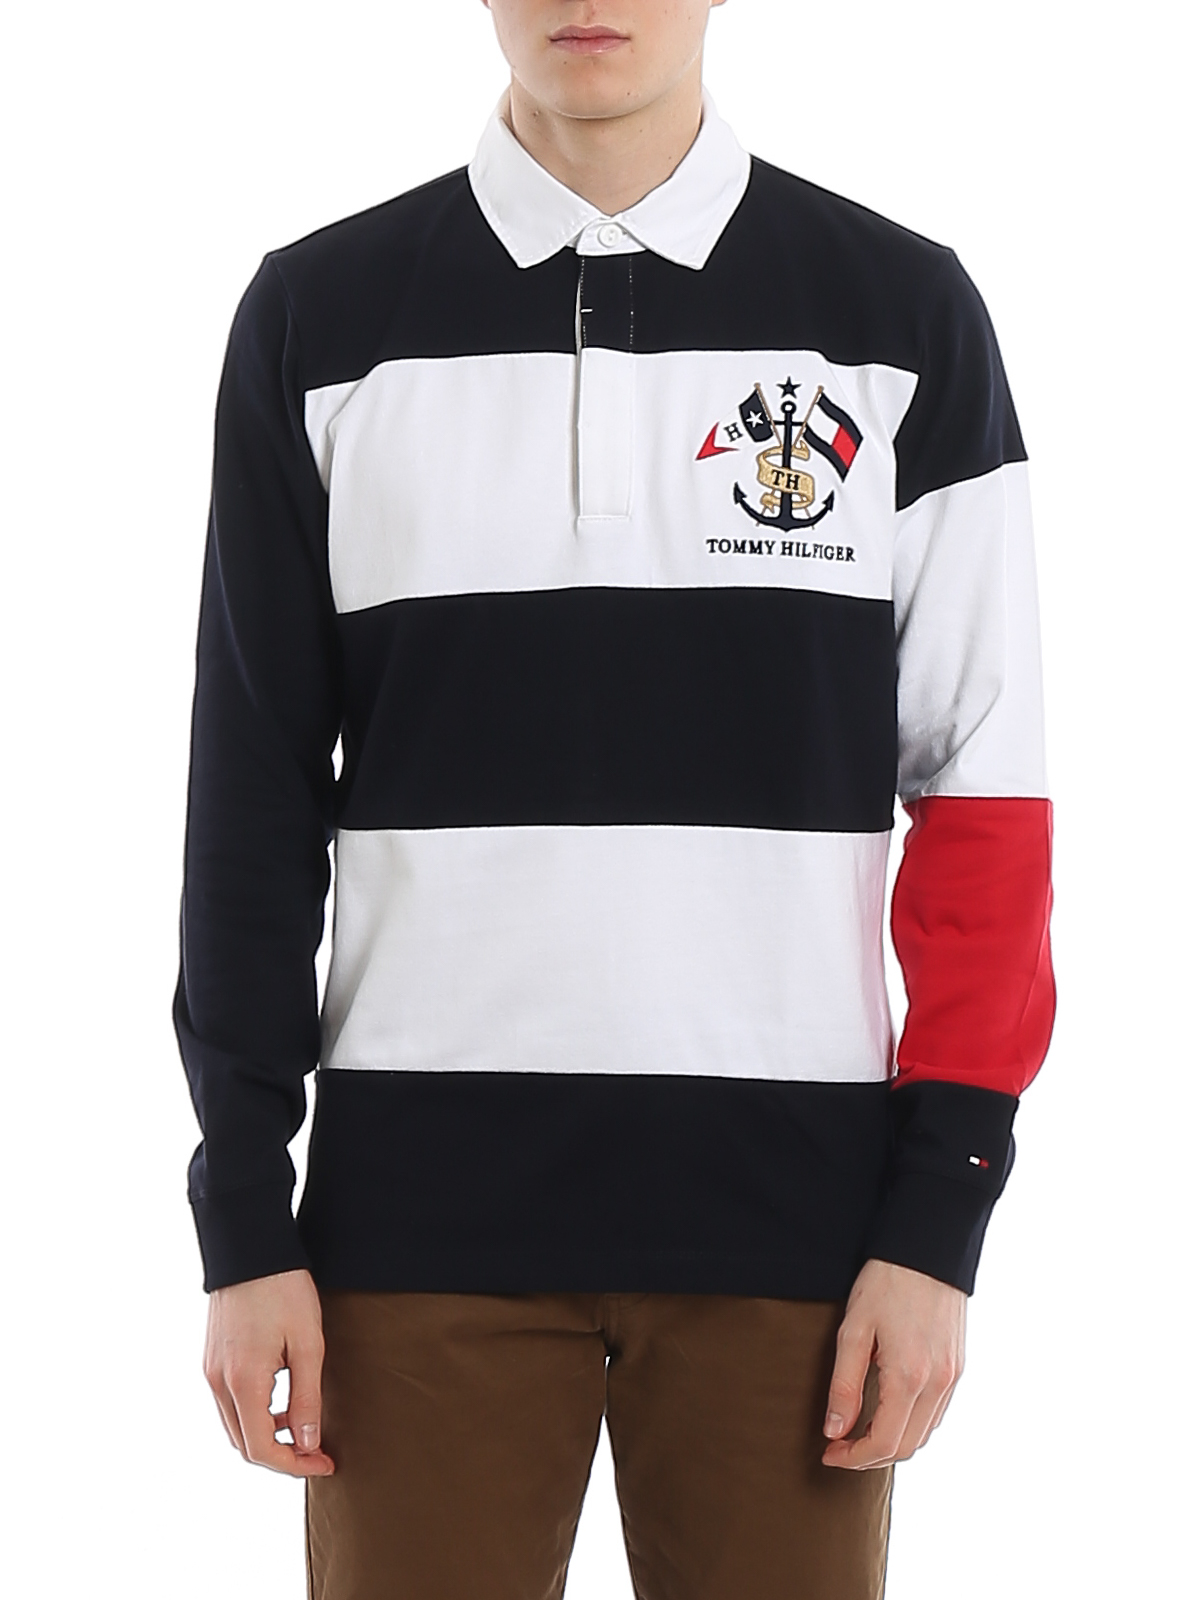 Cornwall Savant leiderschap Polo shirts Tommy Hilfiger - Striped polo shirt - MW0MW124680A4